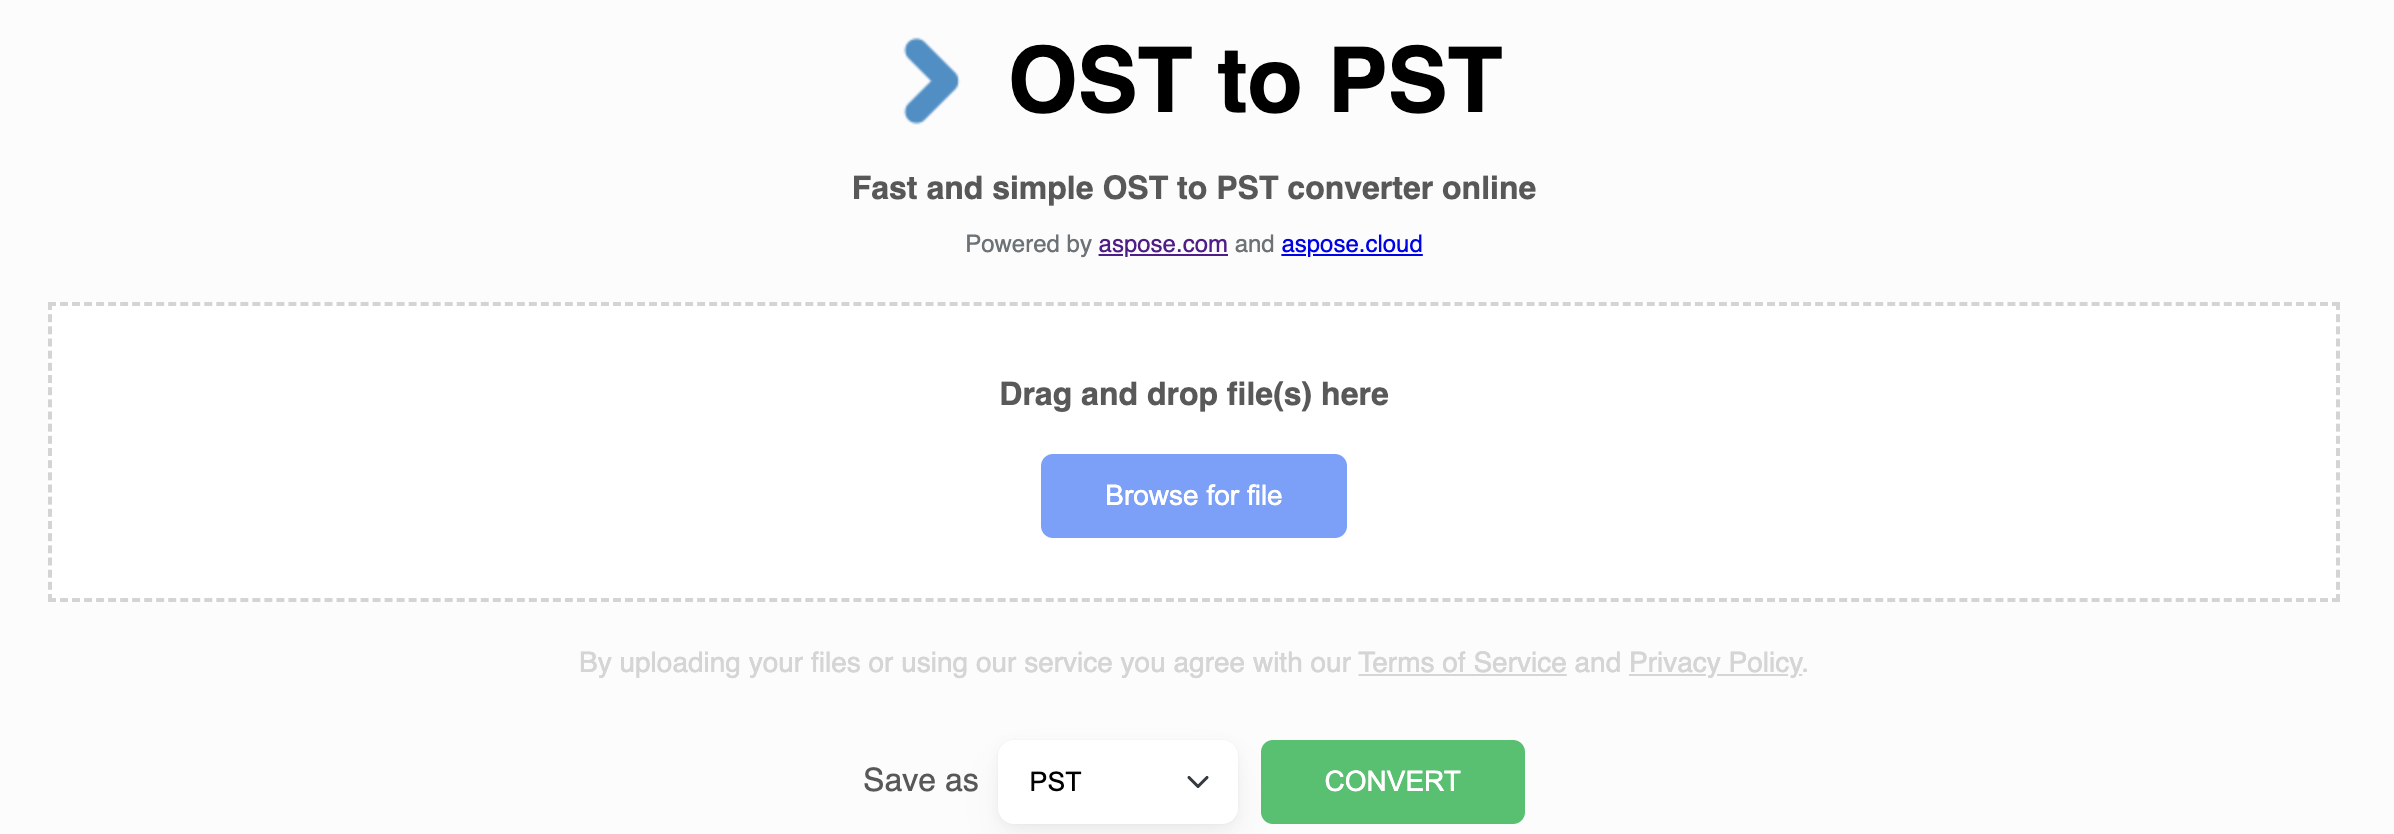 Free OS Tto PST Converter